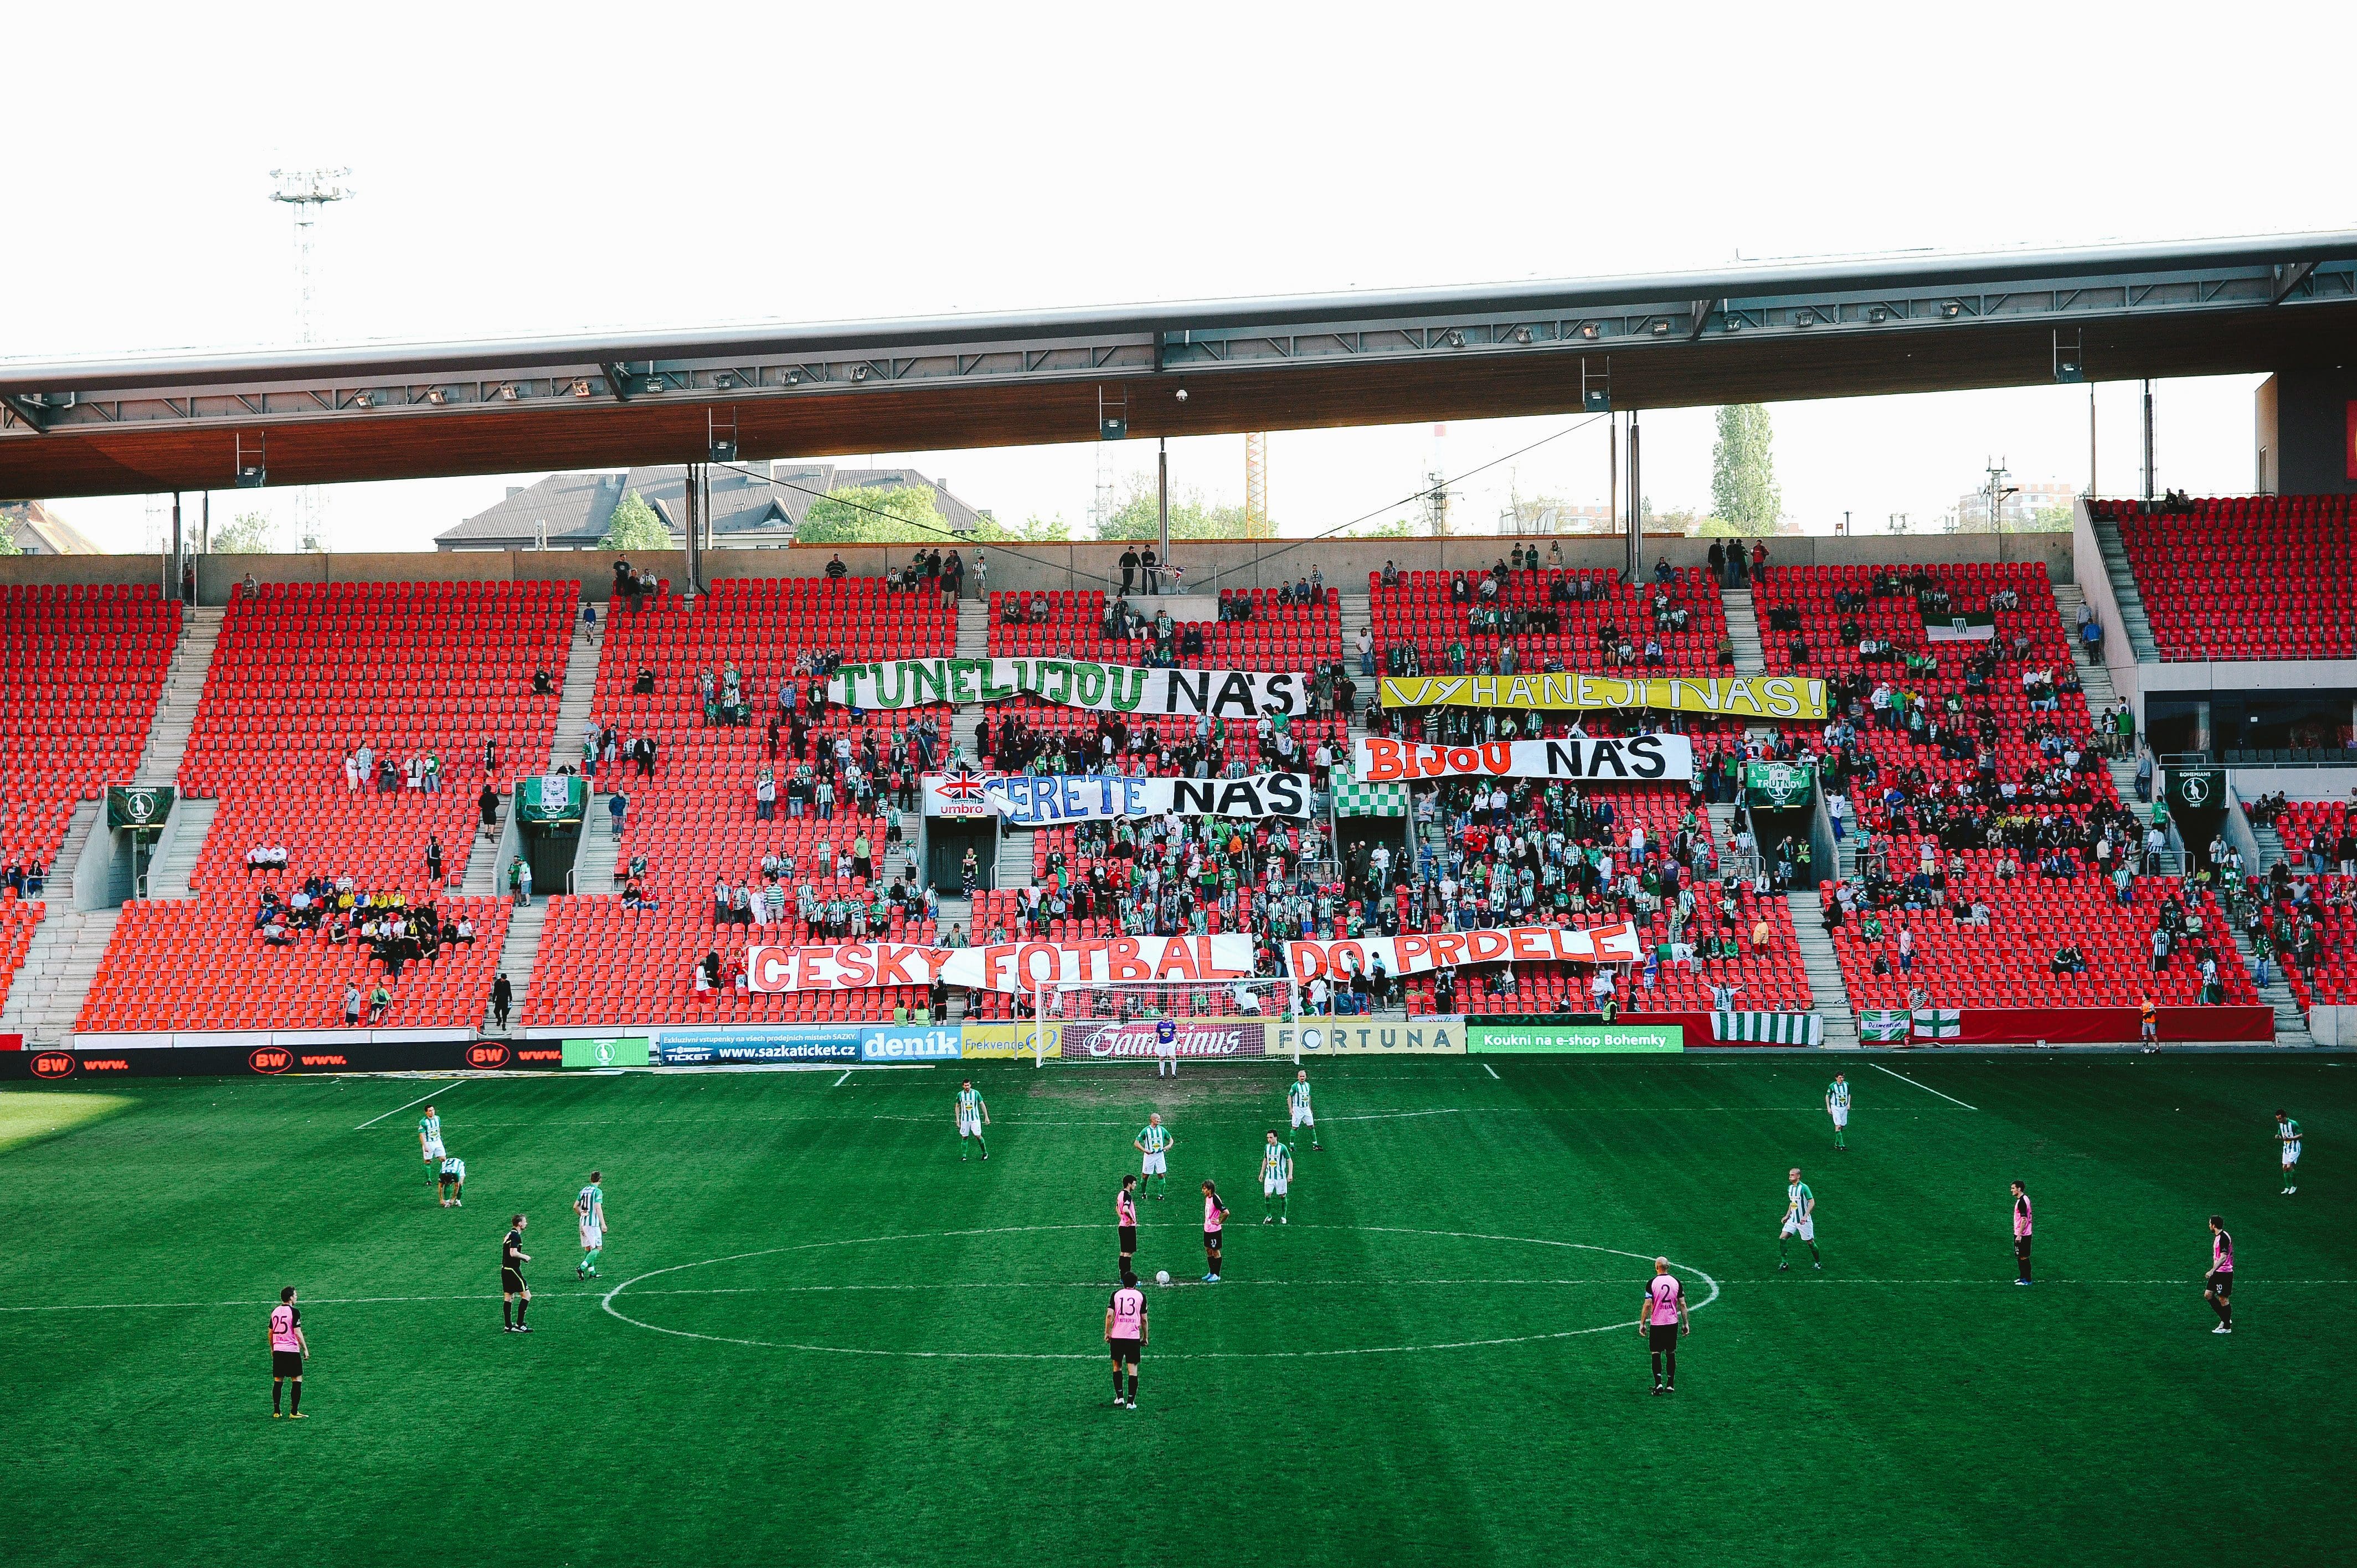 Ďolíček studium with supporters cheering on their local football team